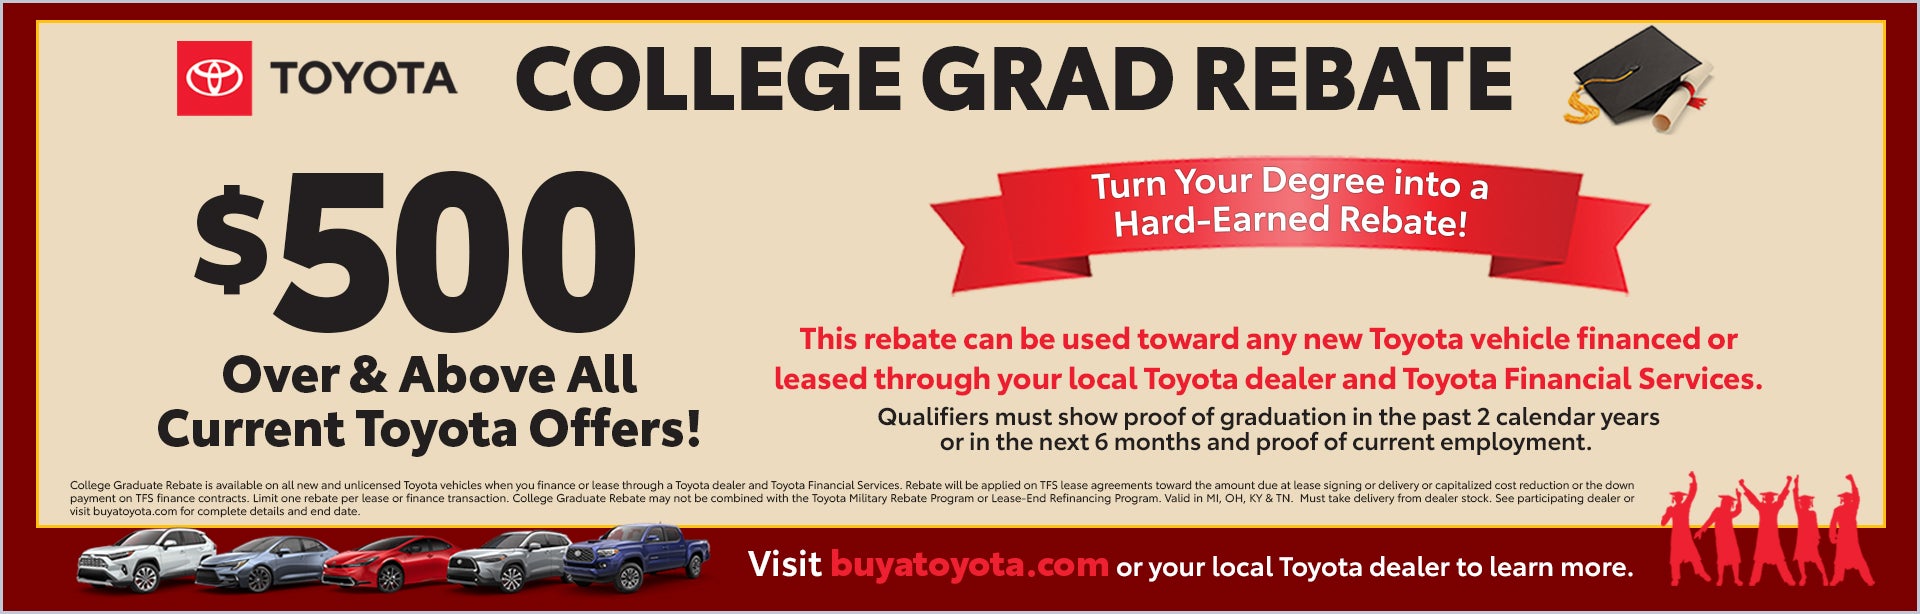 Toyota College Grad Rebate in Memphis TN